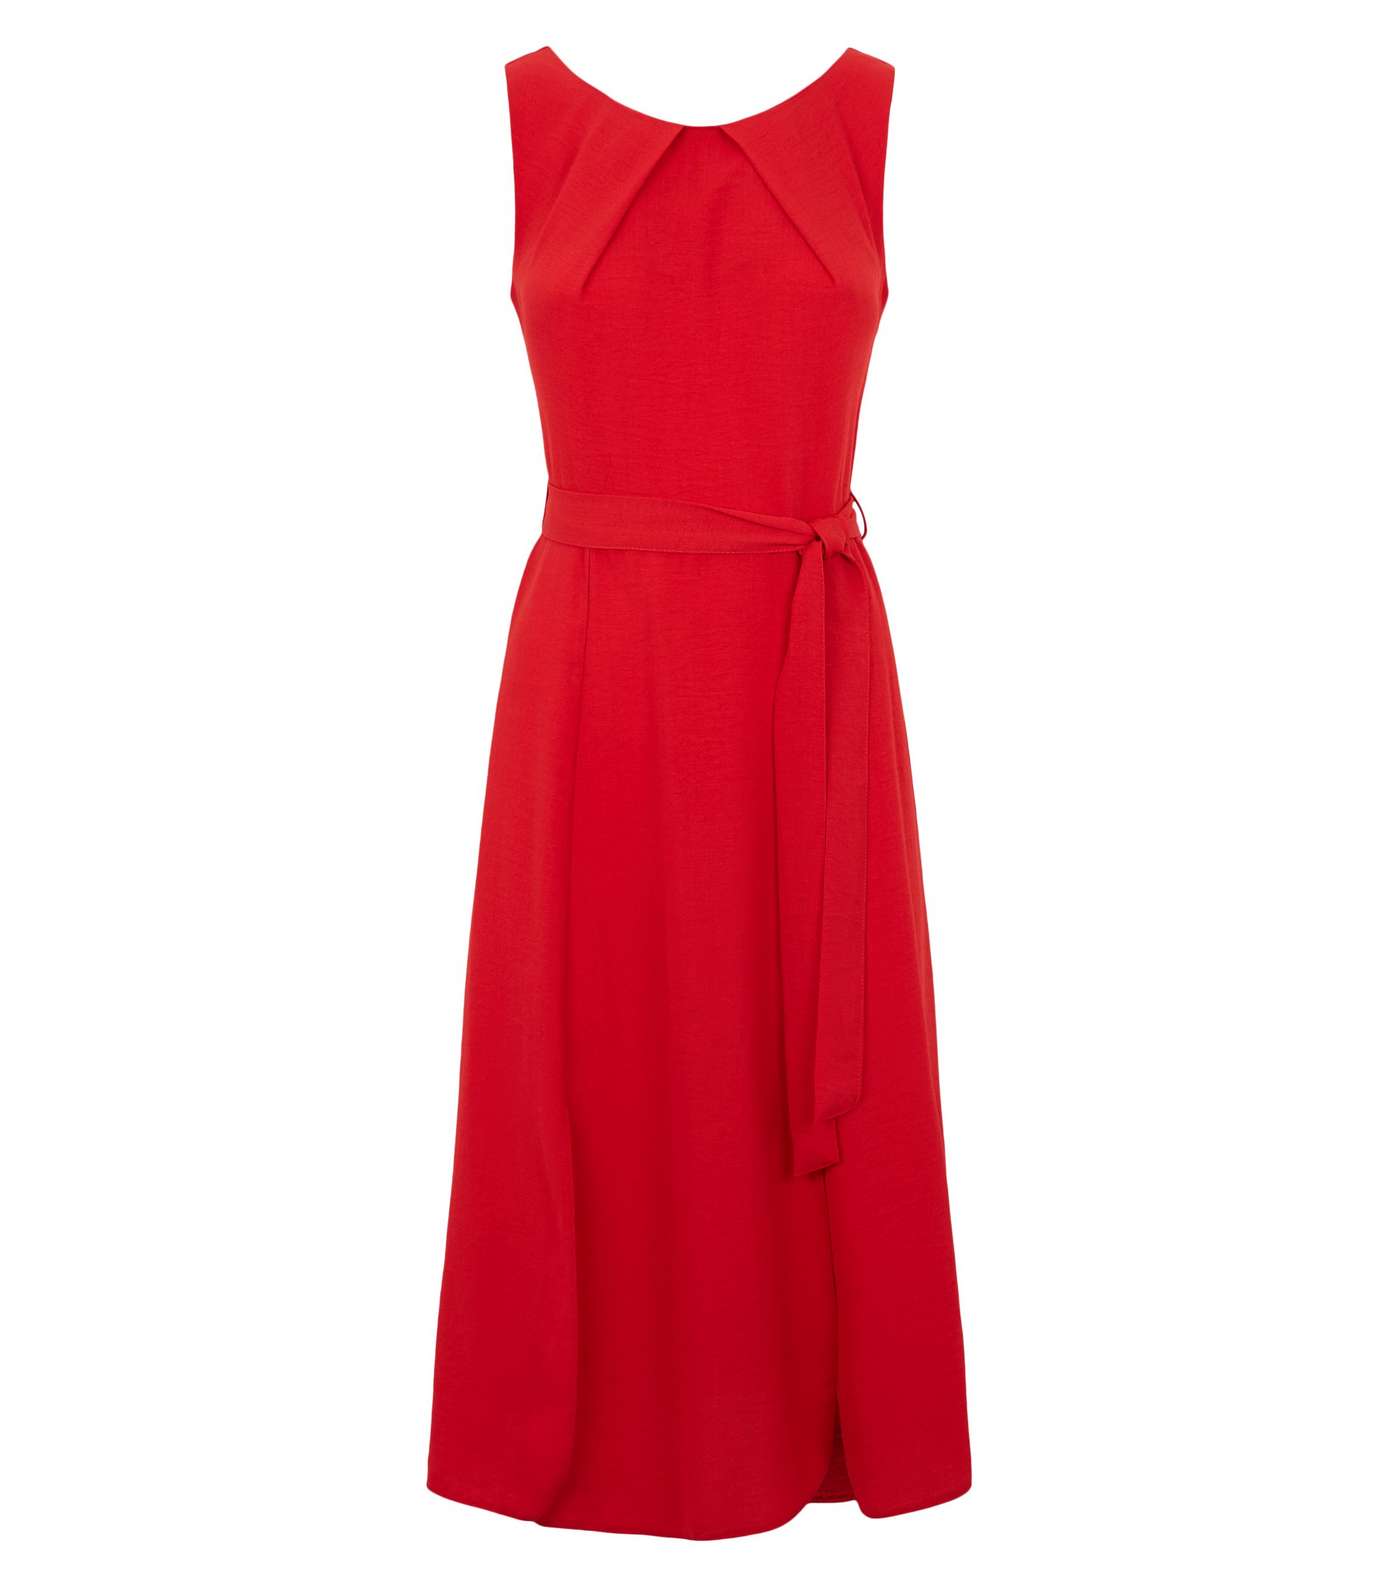 Apricot Red Plain Skater Dress Image 4